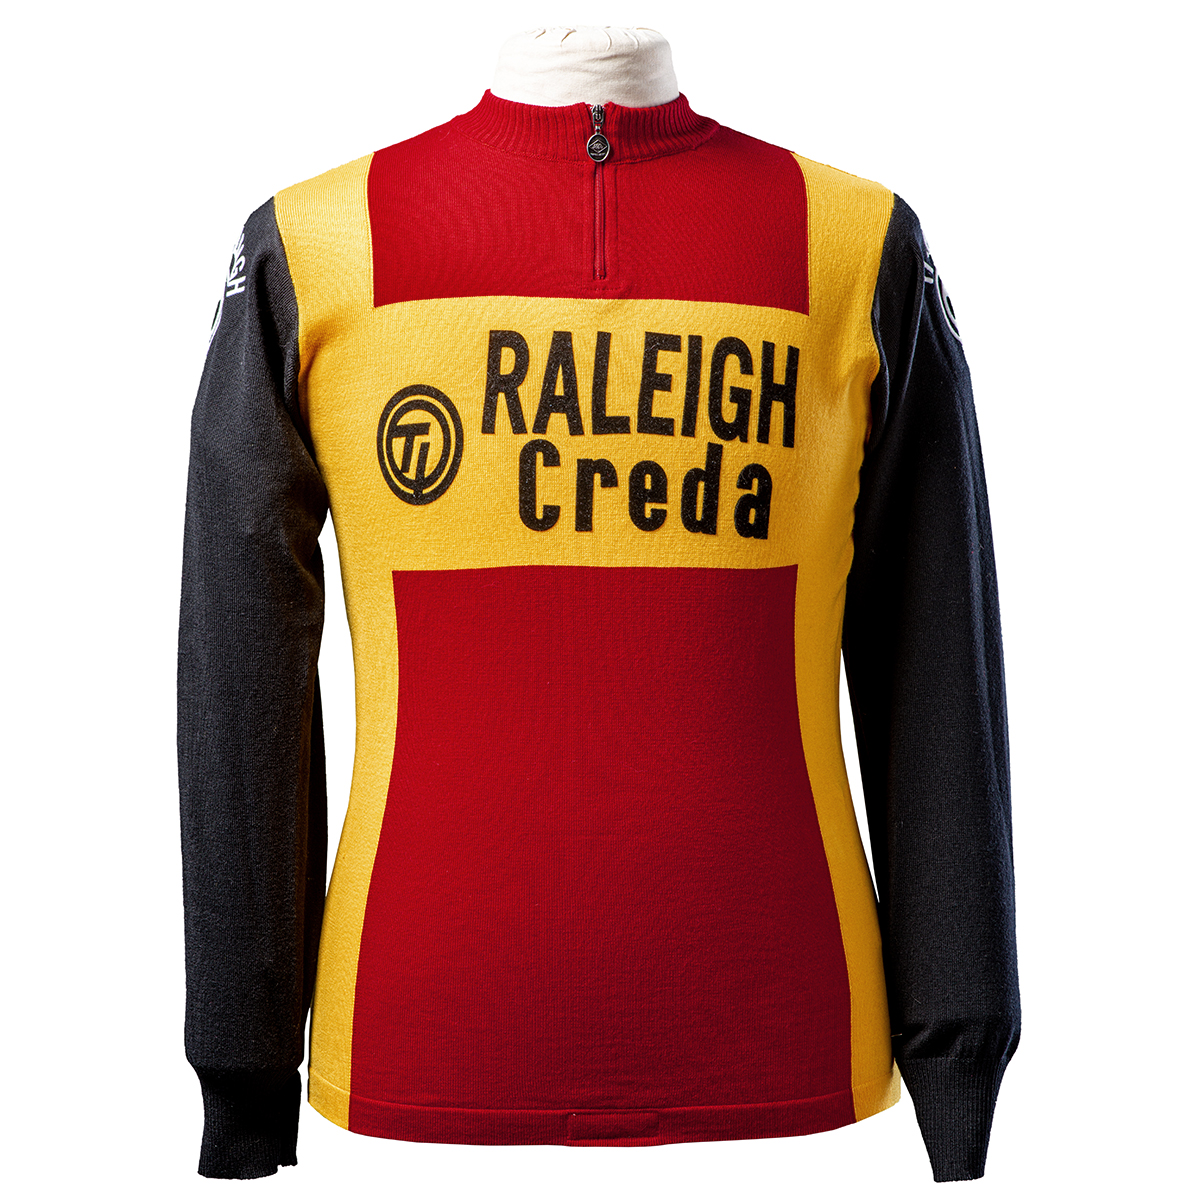 Corte de pelo agradable étnico Vintage cycling Jersey - Raleigh creda Team - Magliamo